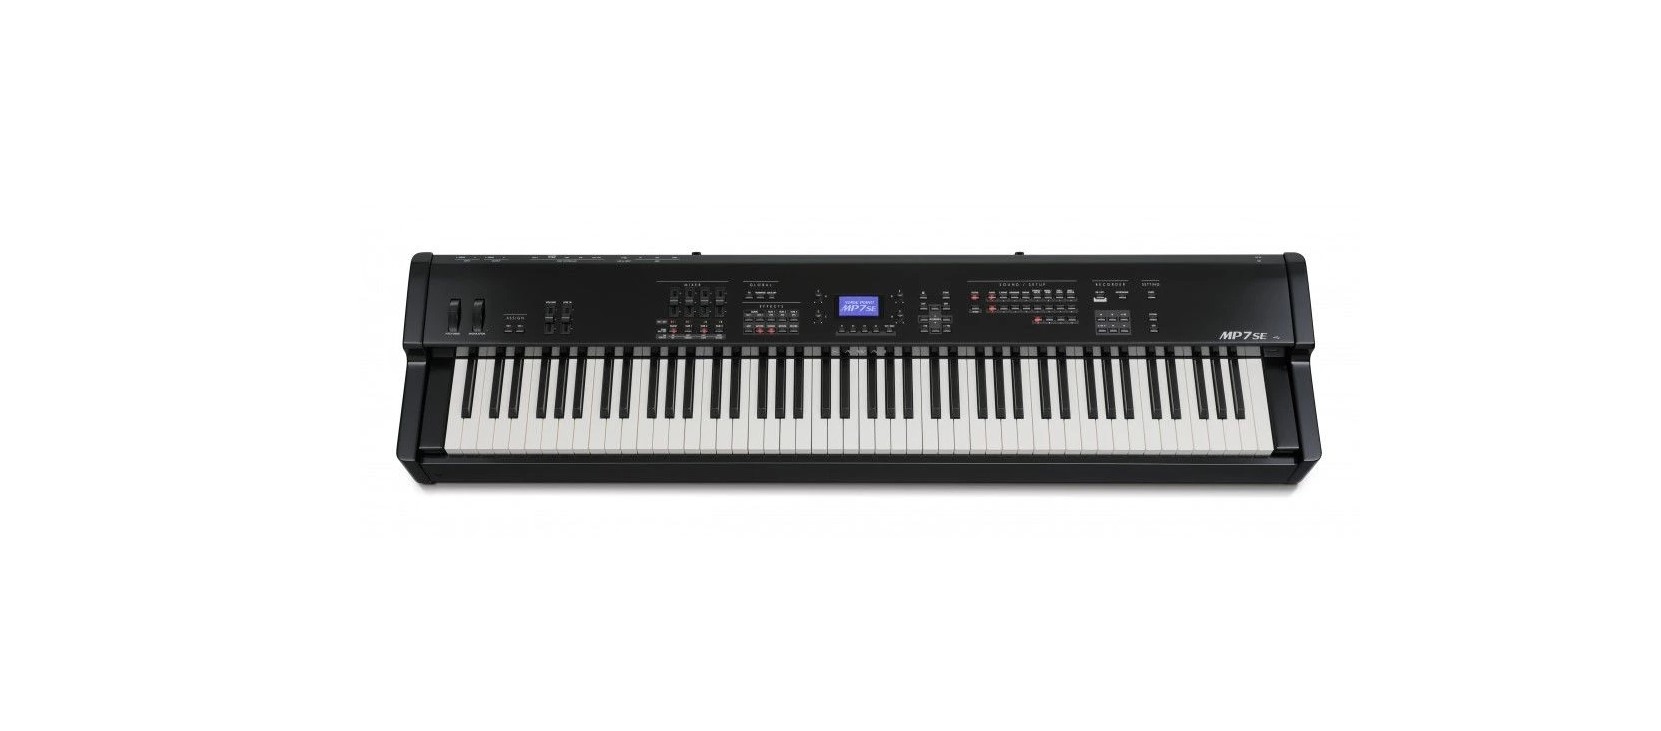 Kawai Mp 7 Se - Noir - Stage keyboard - Variation 1